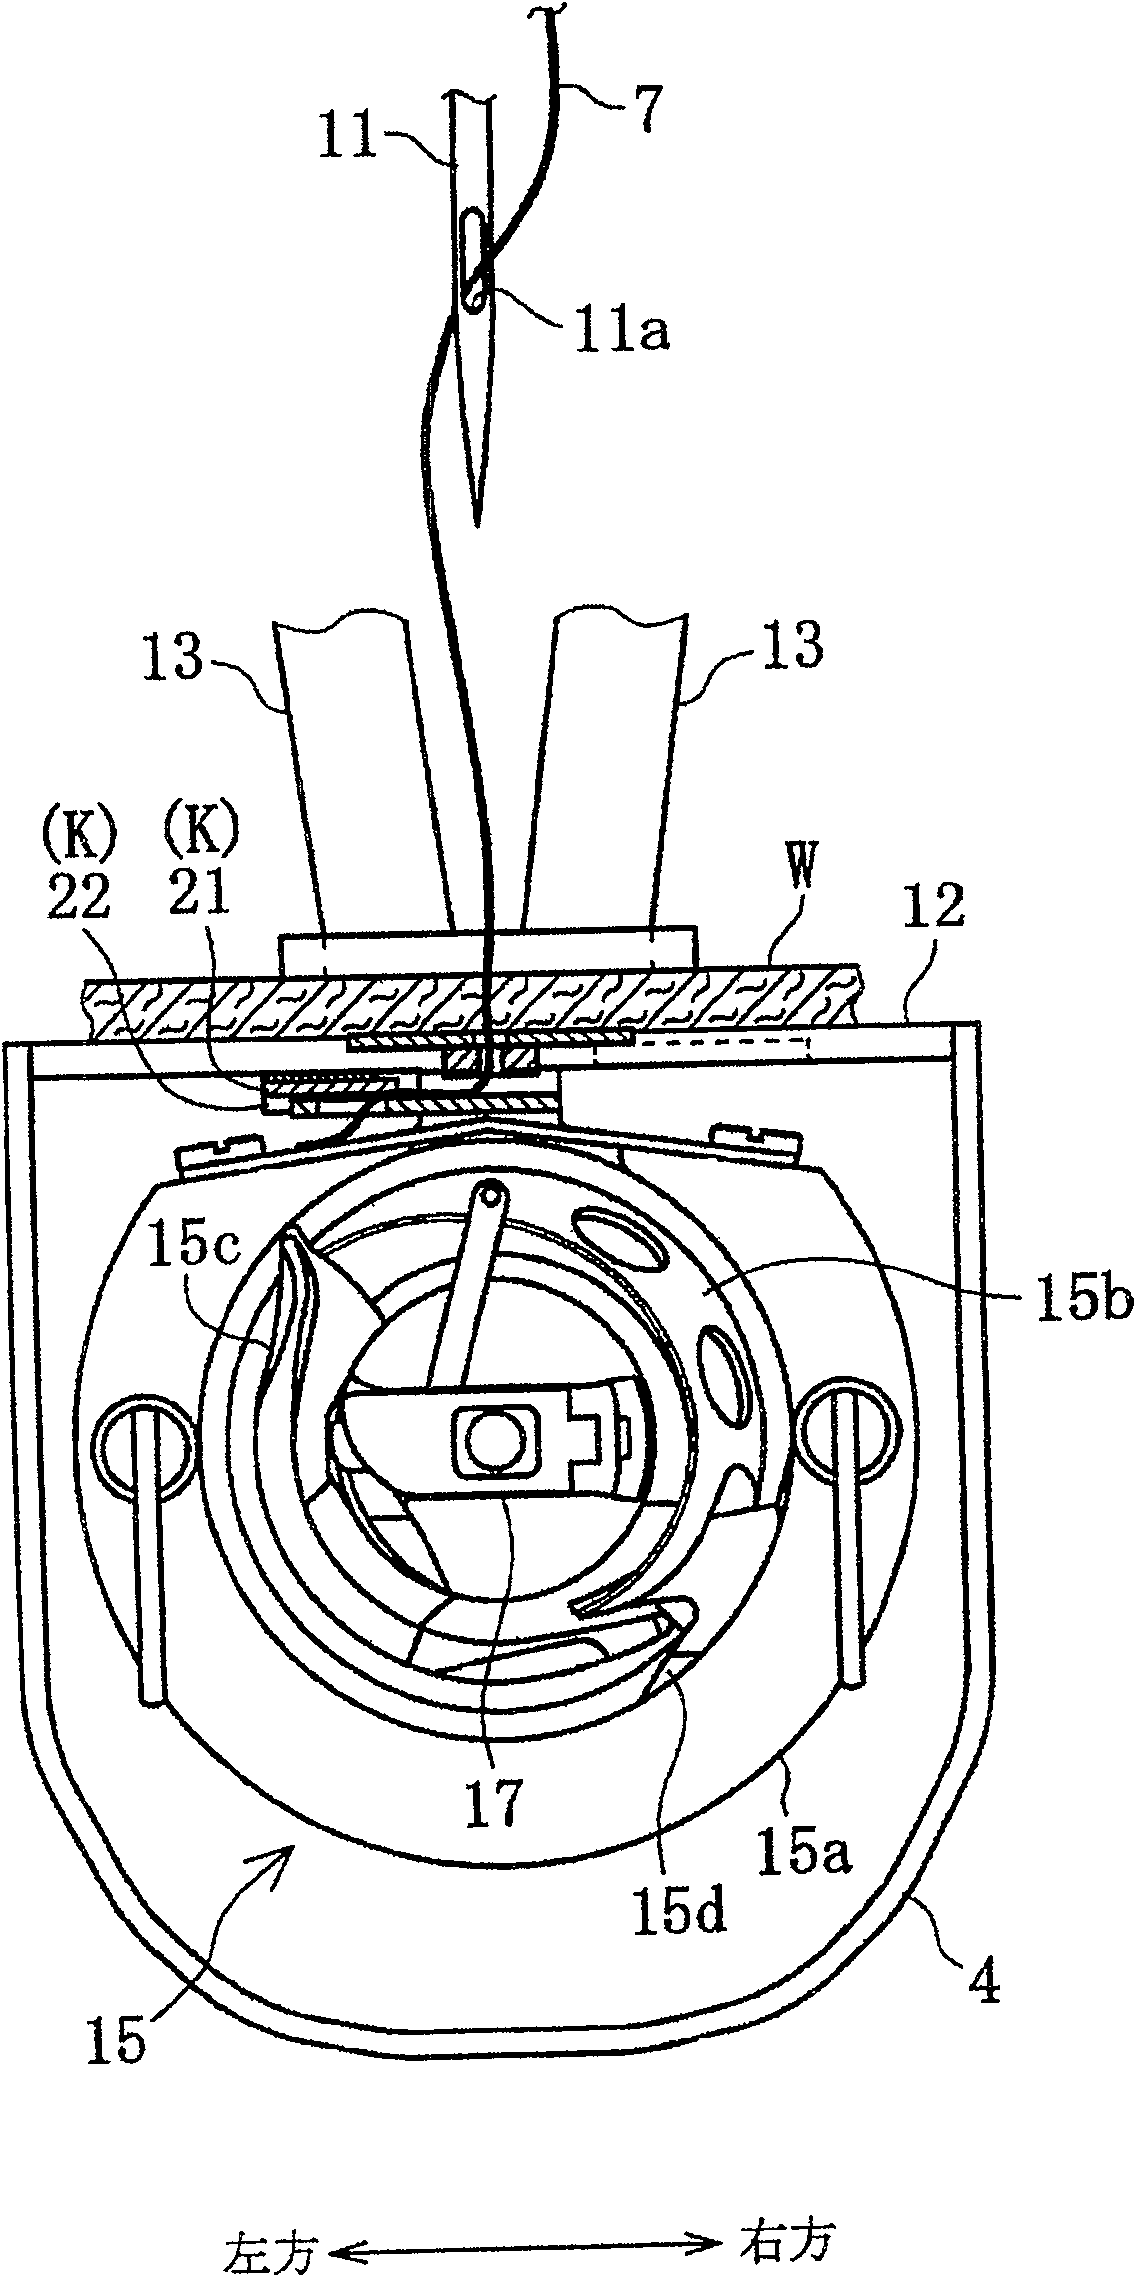 Threading holder of sewing machine